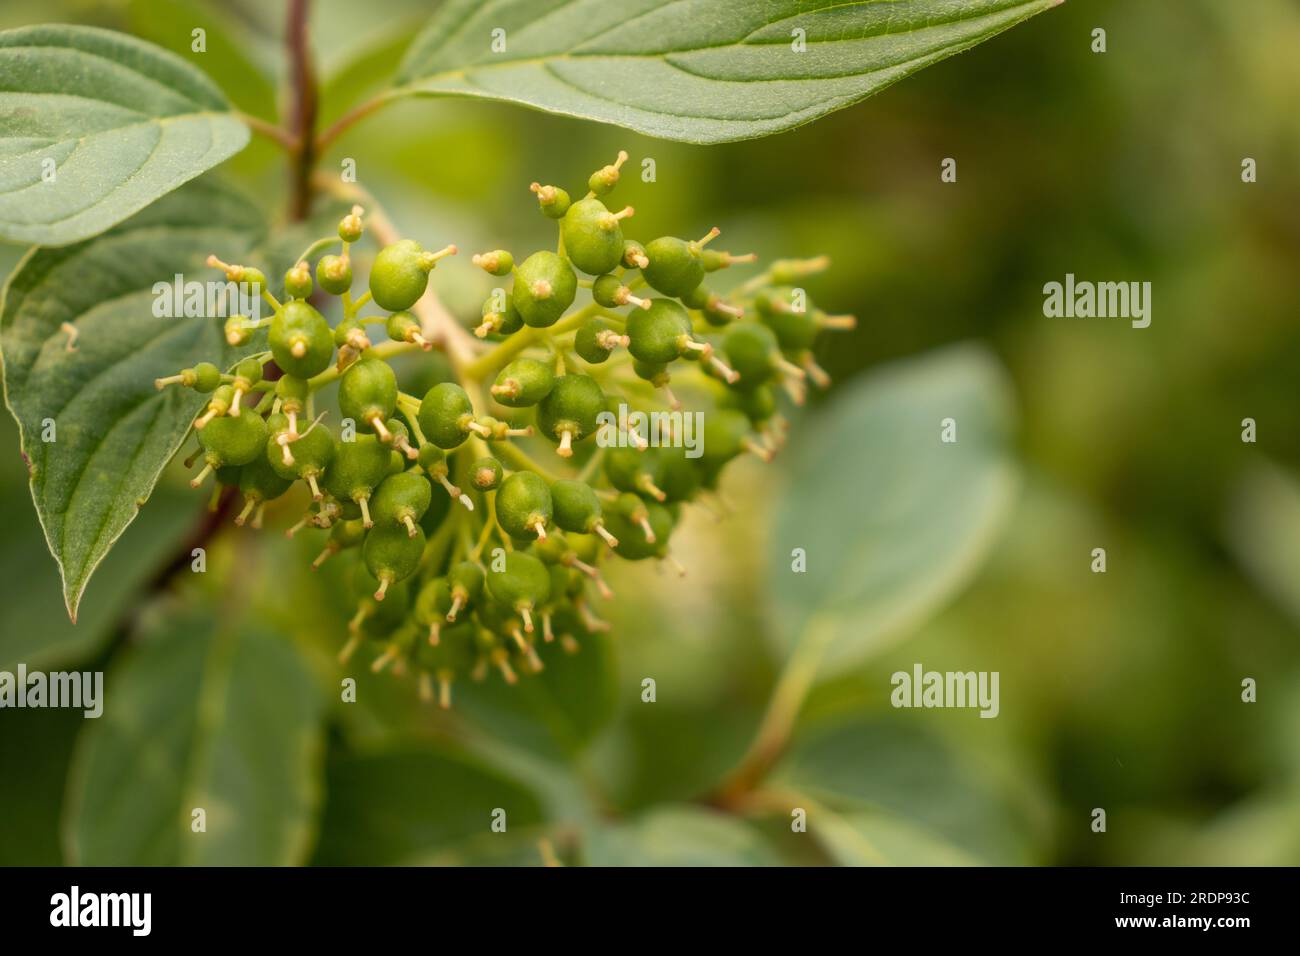 Close up of green flower berries on cornus dogwood tree - blurred background Stock Photo